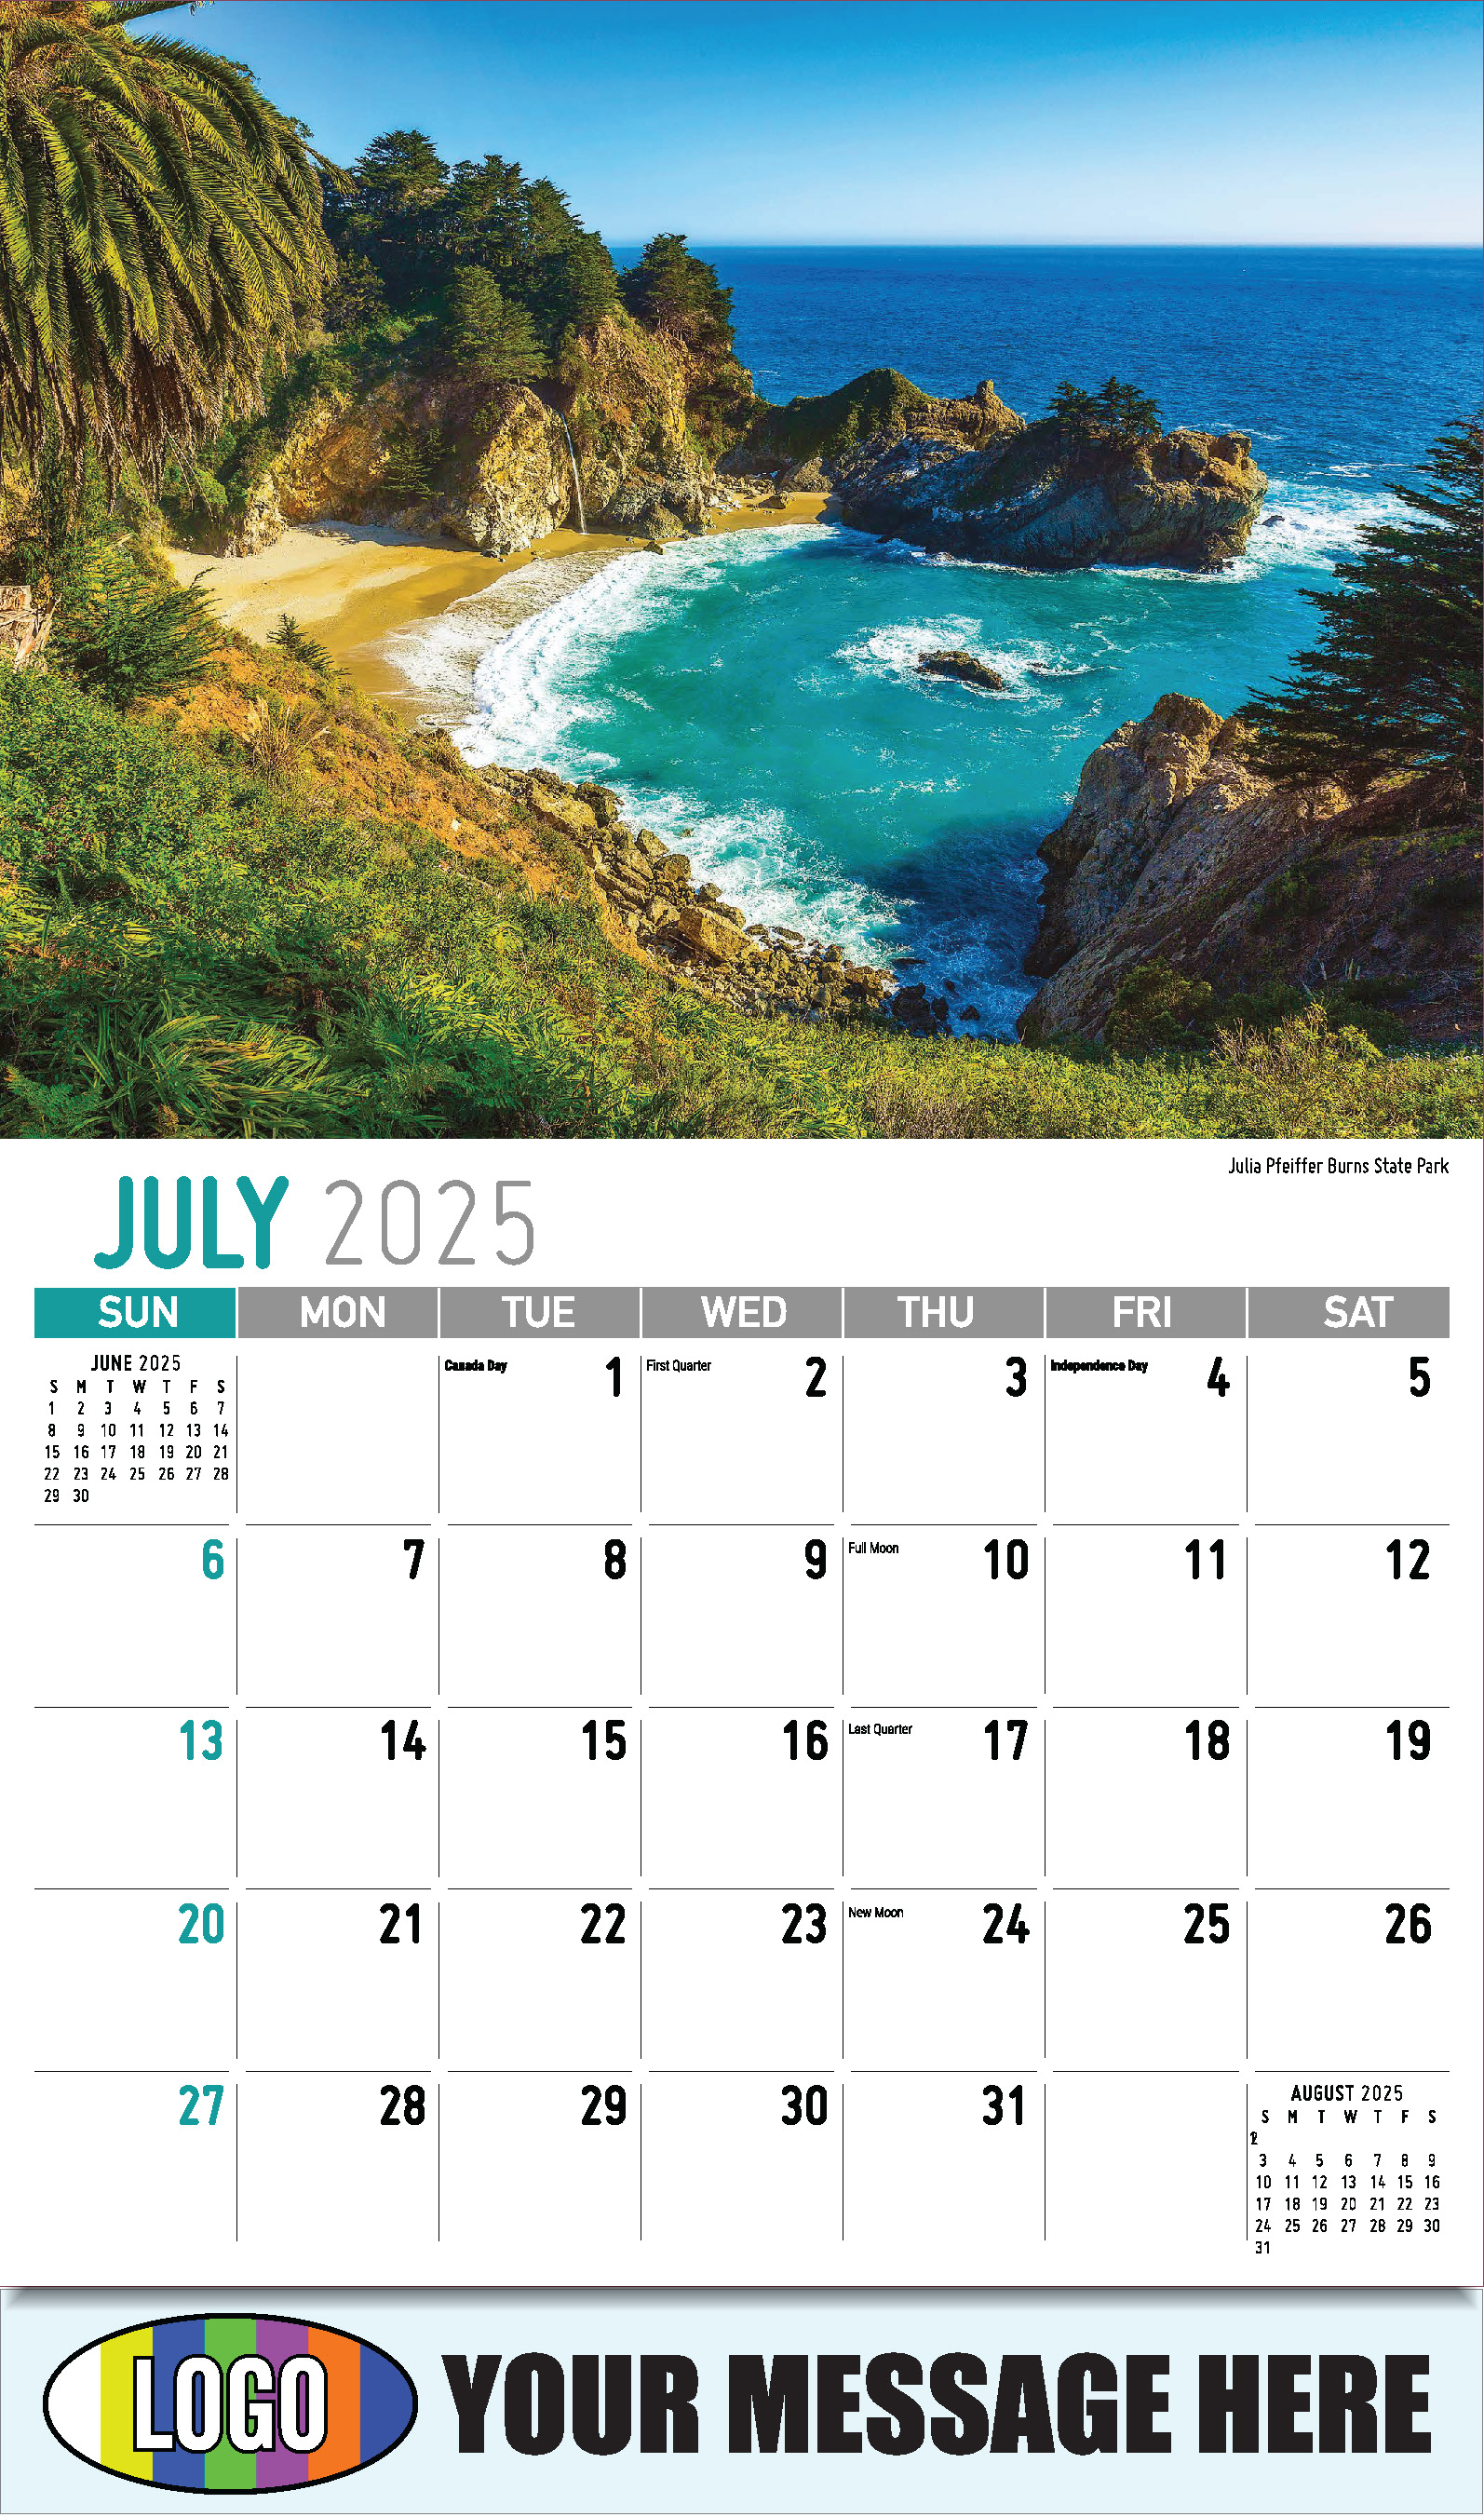 Scenes of California 2025 Business Advertising Wall Calendar - July